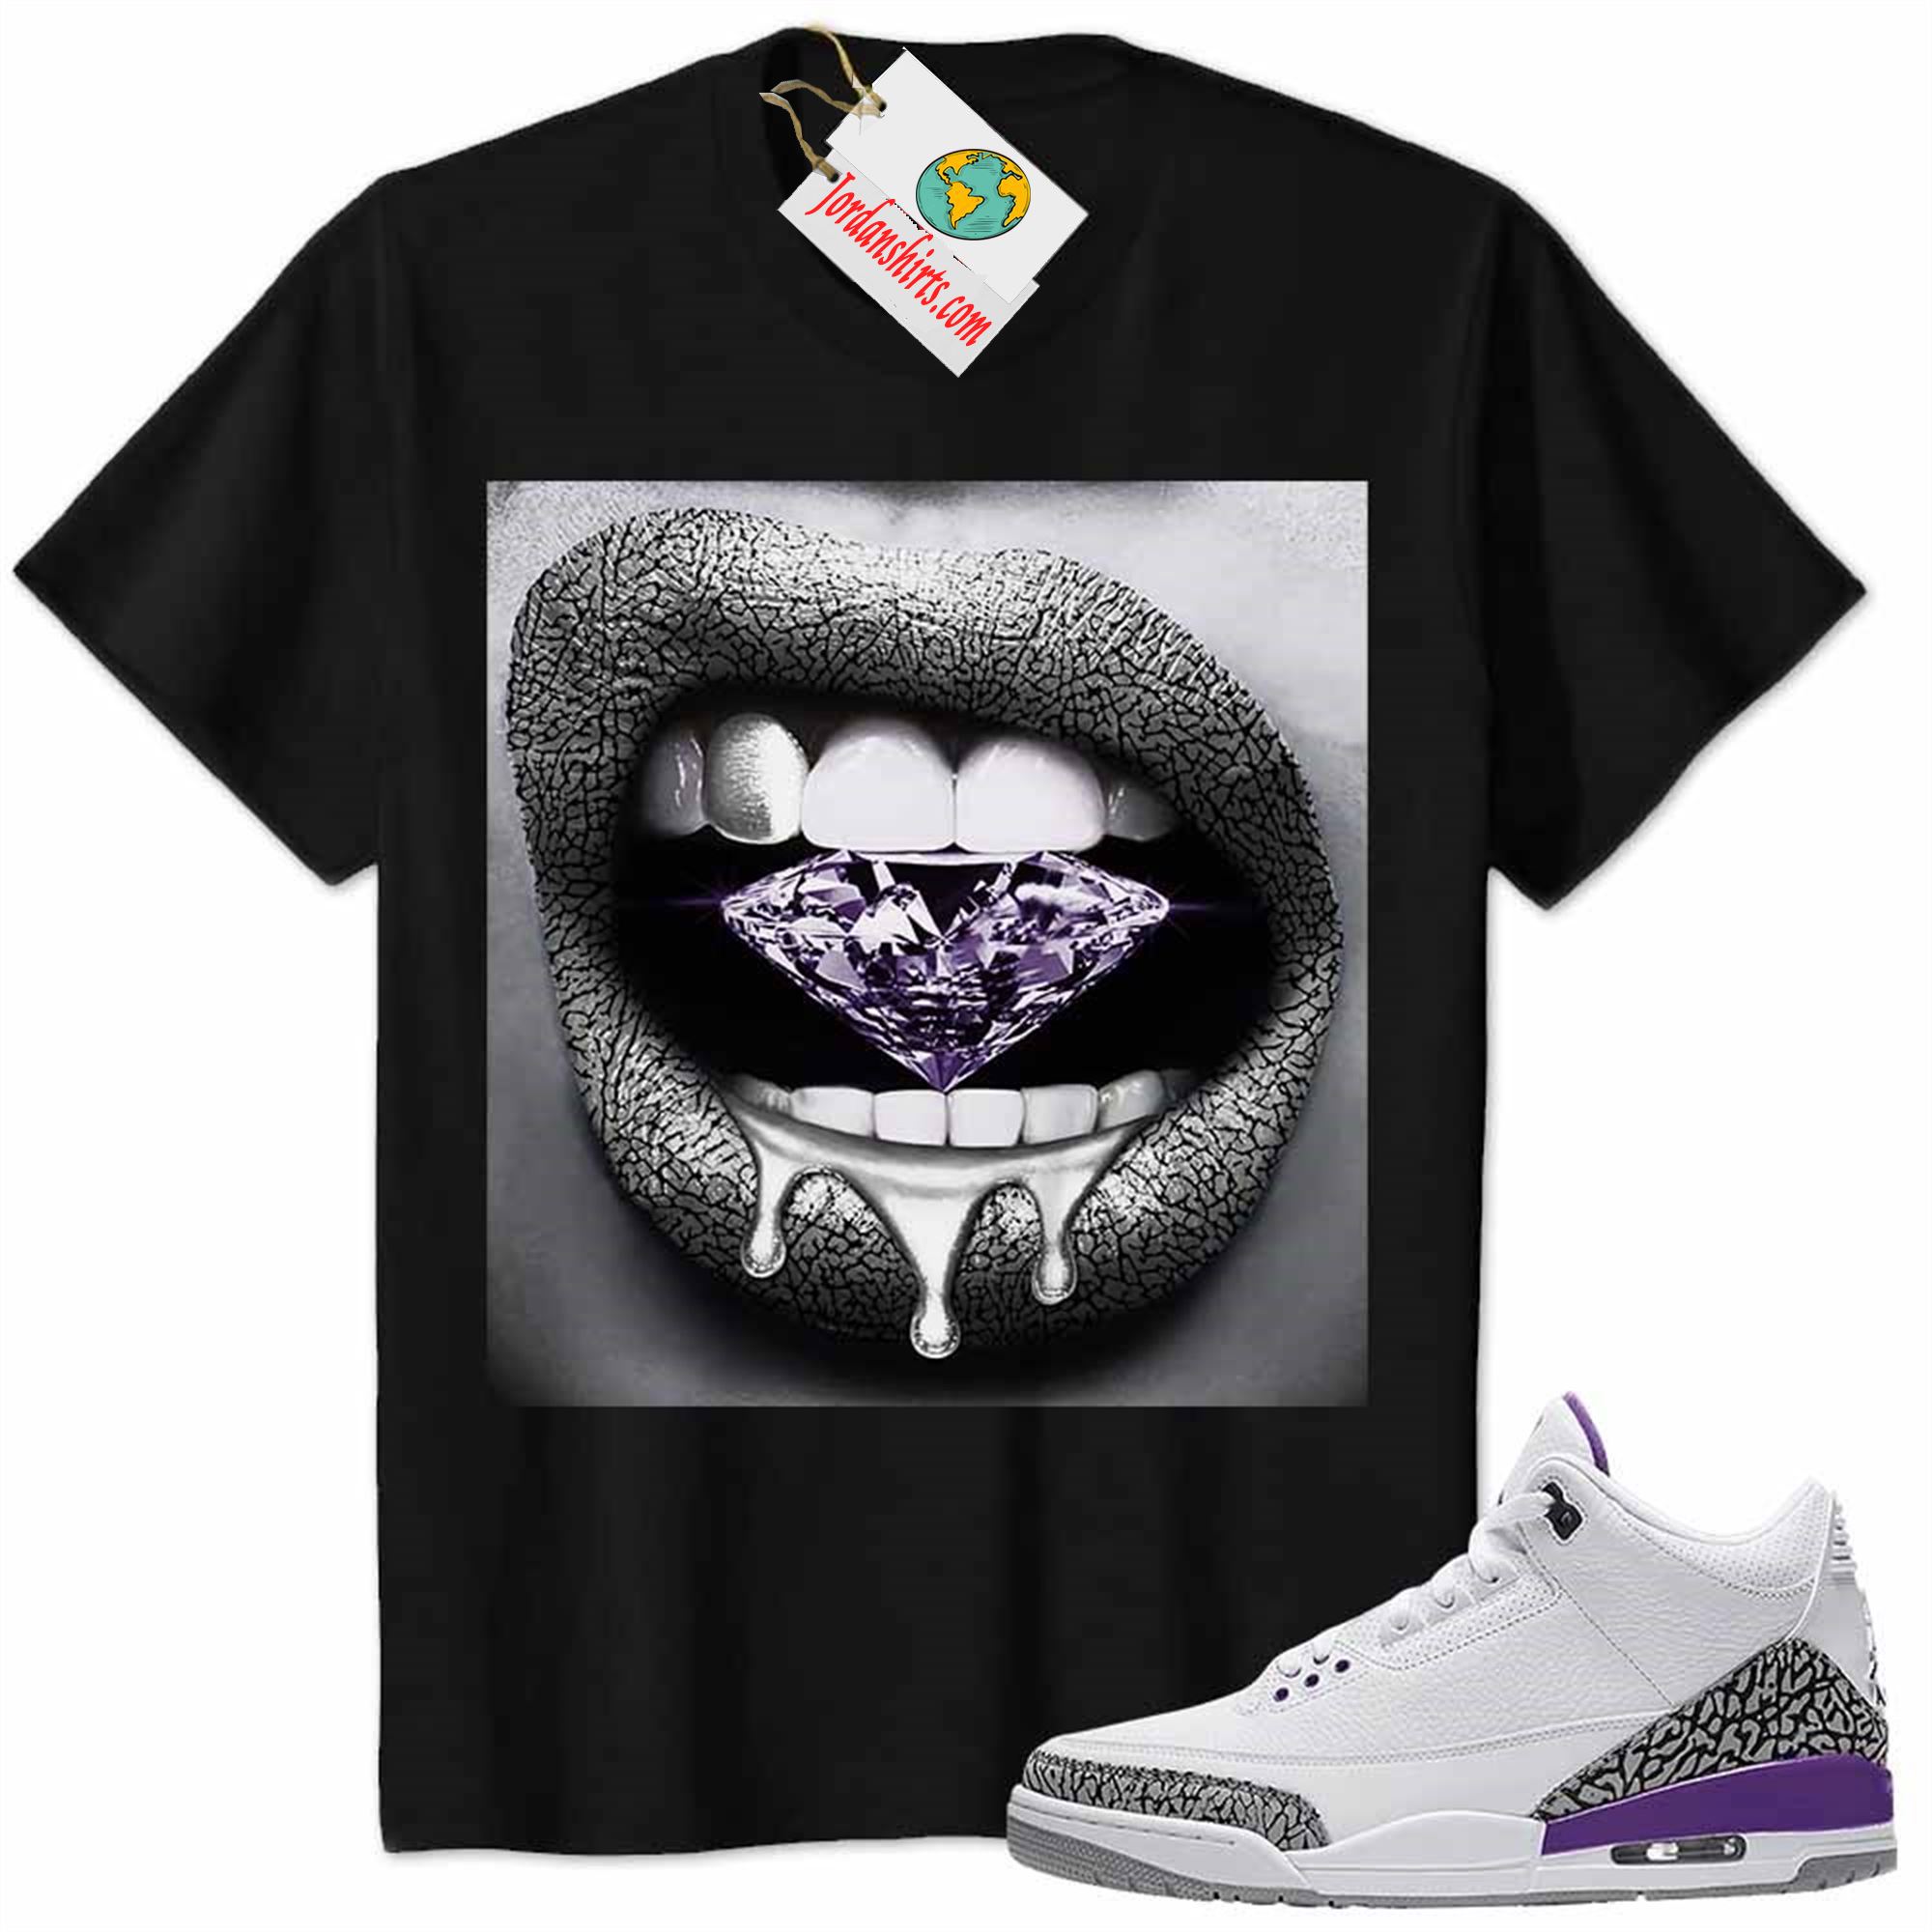 Jordan 3 Shirt, Jordan 3 Wmns Dark Iris Violet Ore Shirt Sexy Lip Bite Diamond Dripping Black Size Up To 5xl